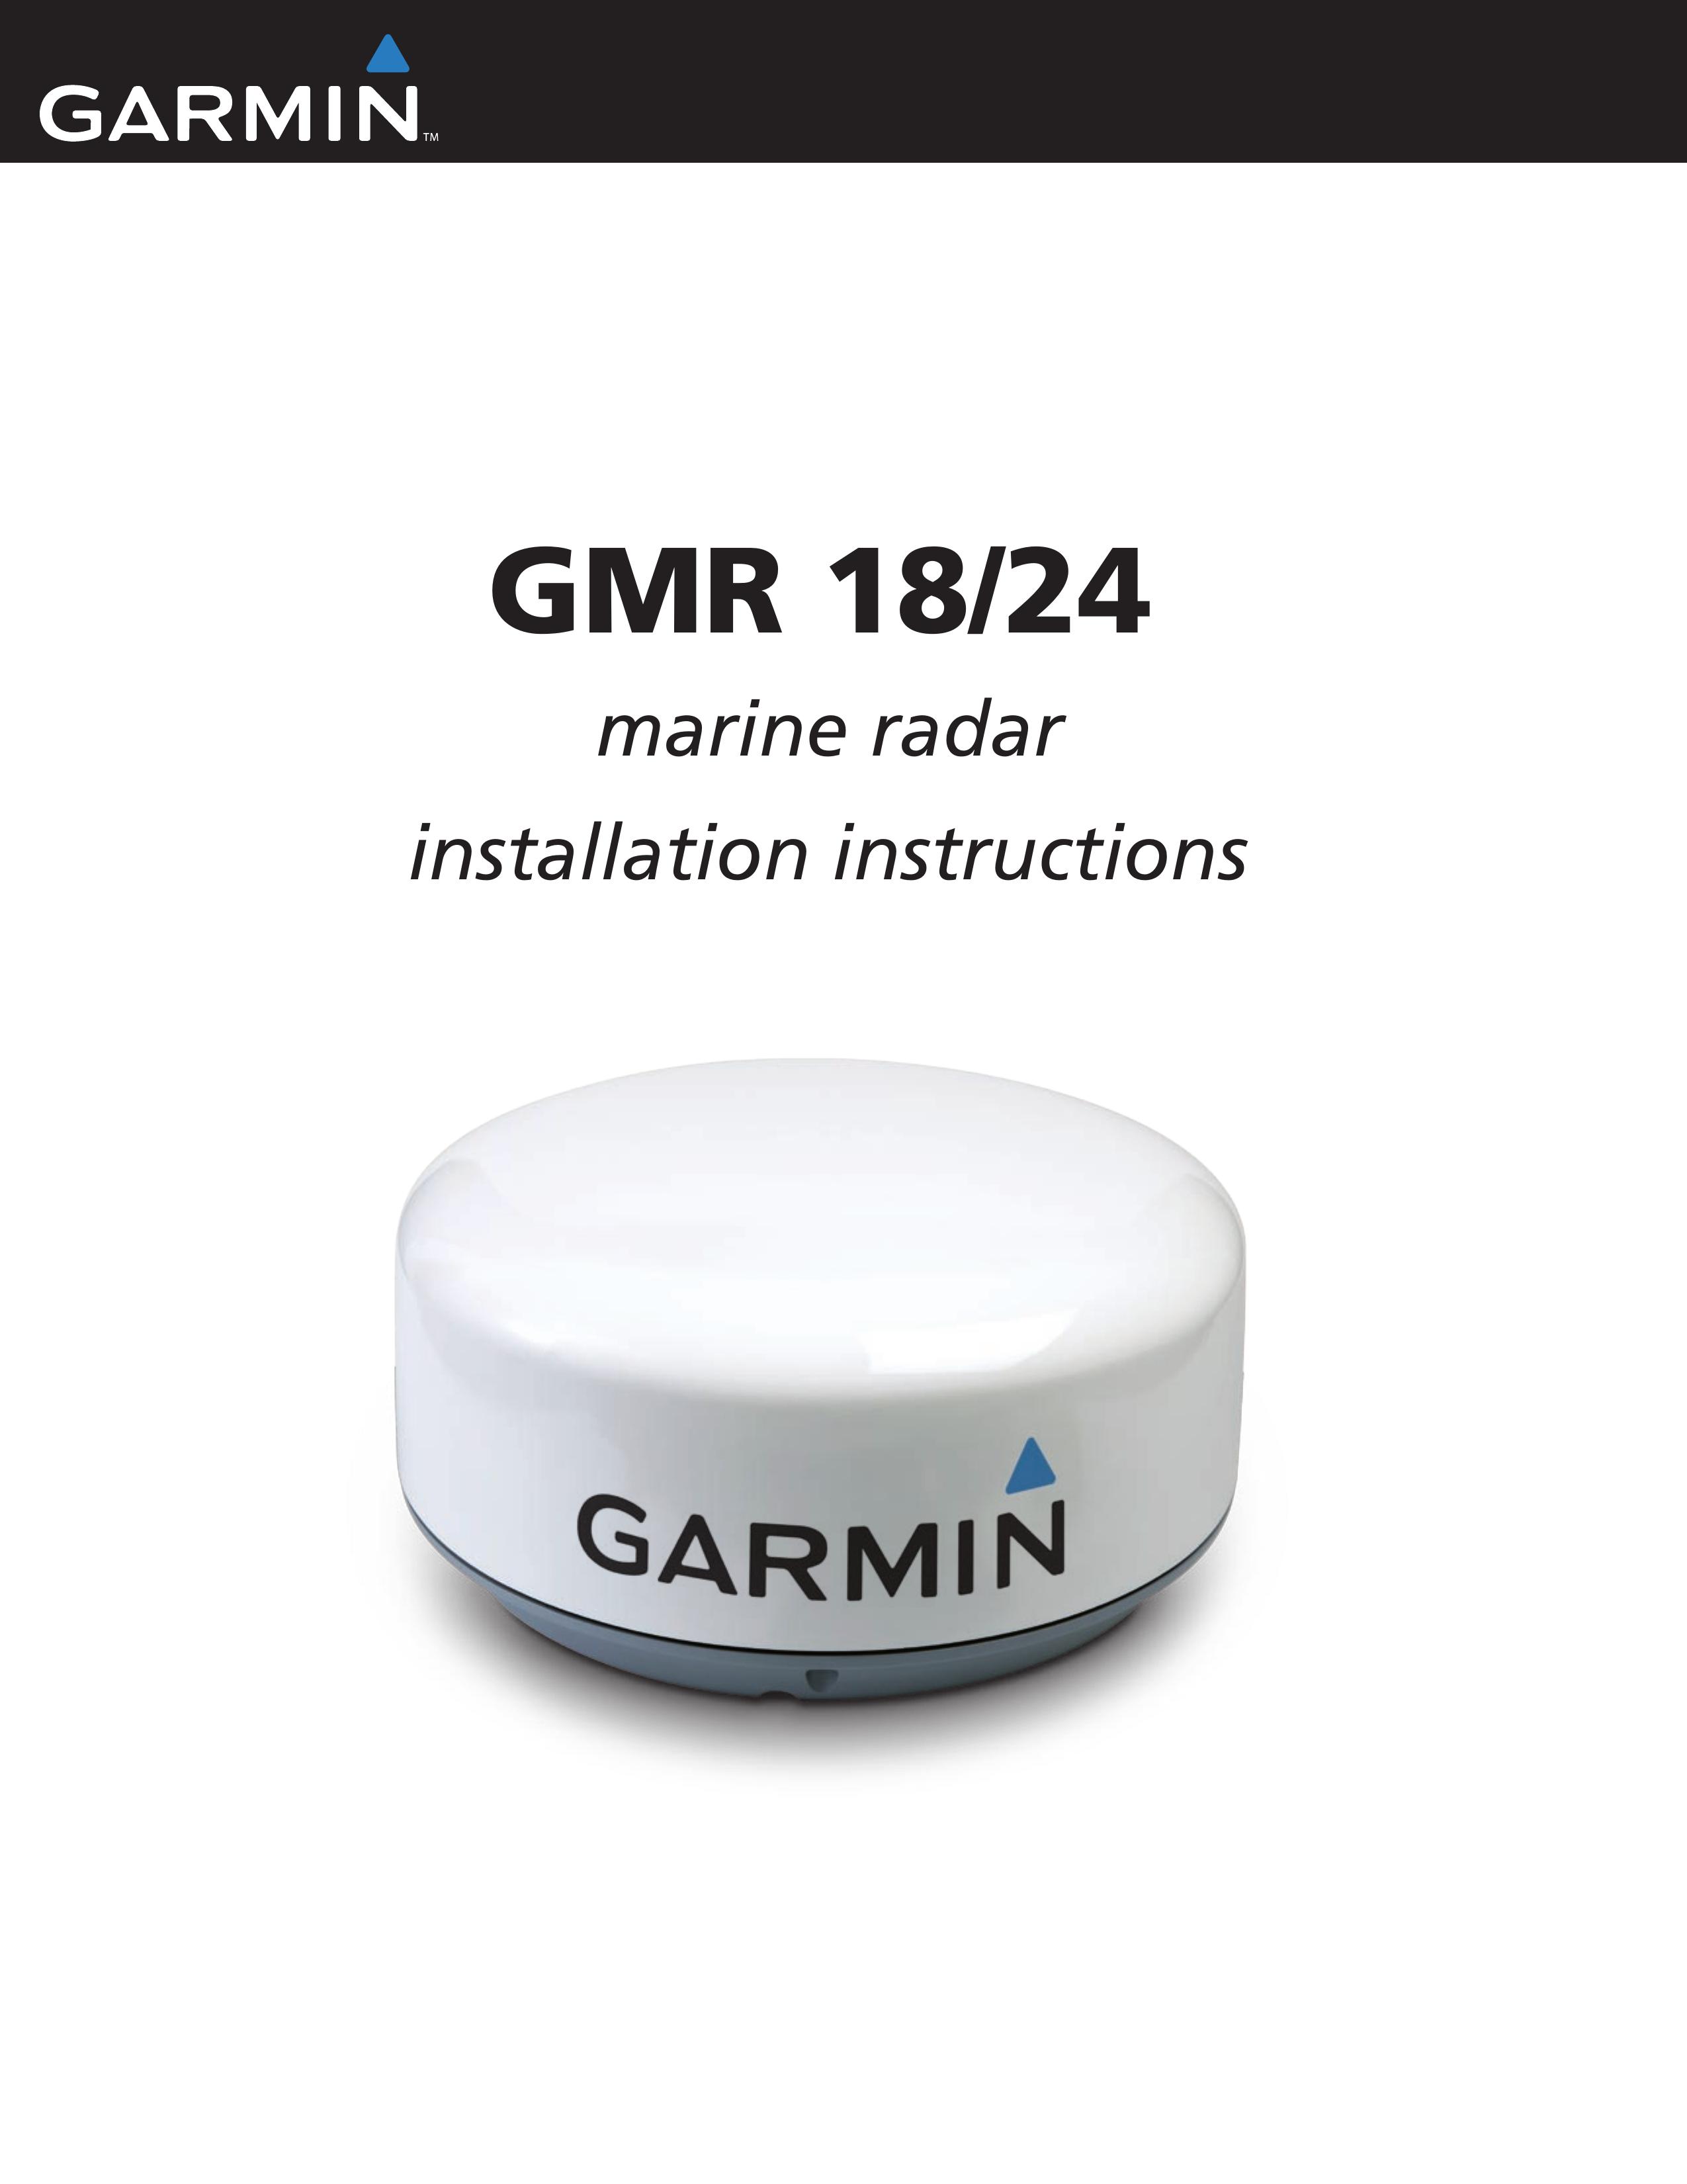 Garmin GMR 18/24 Marine RADAR User Manual